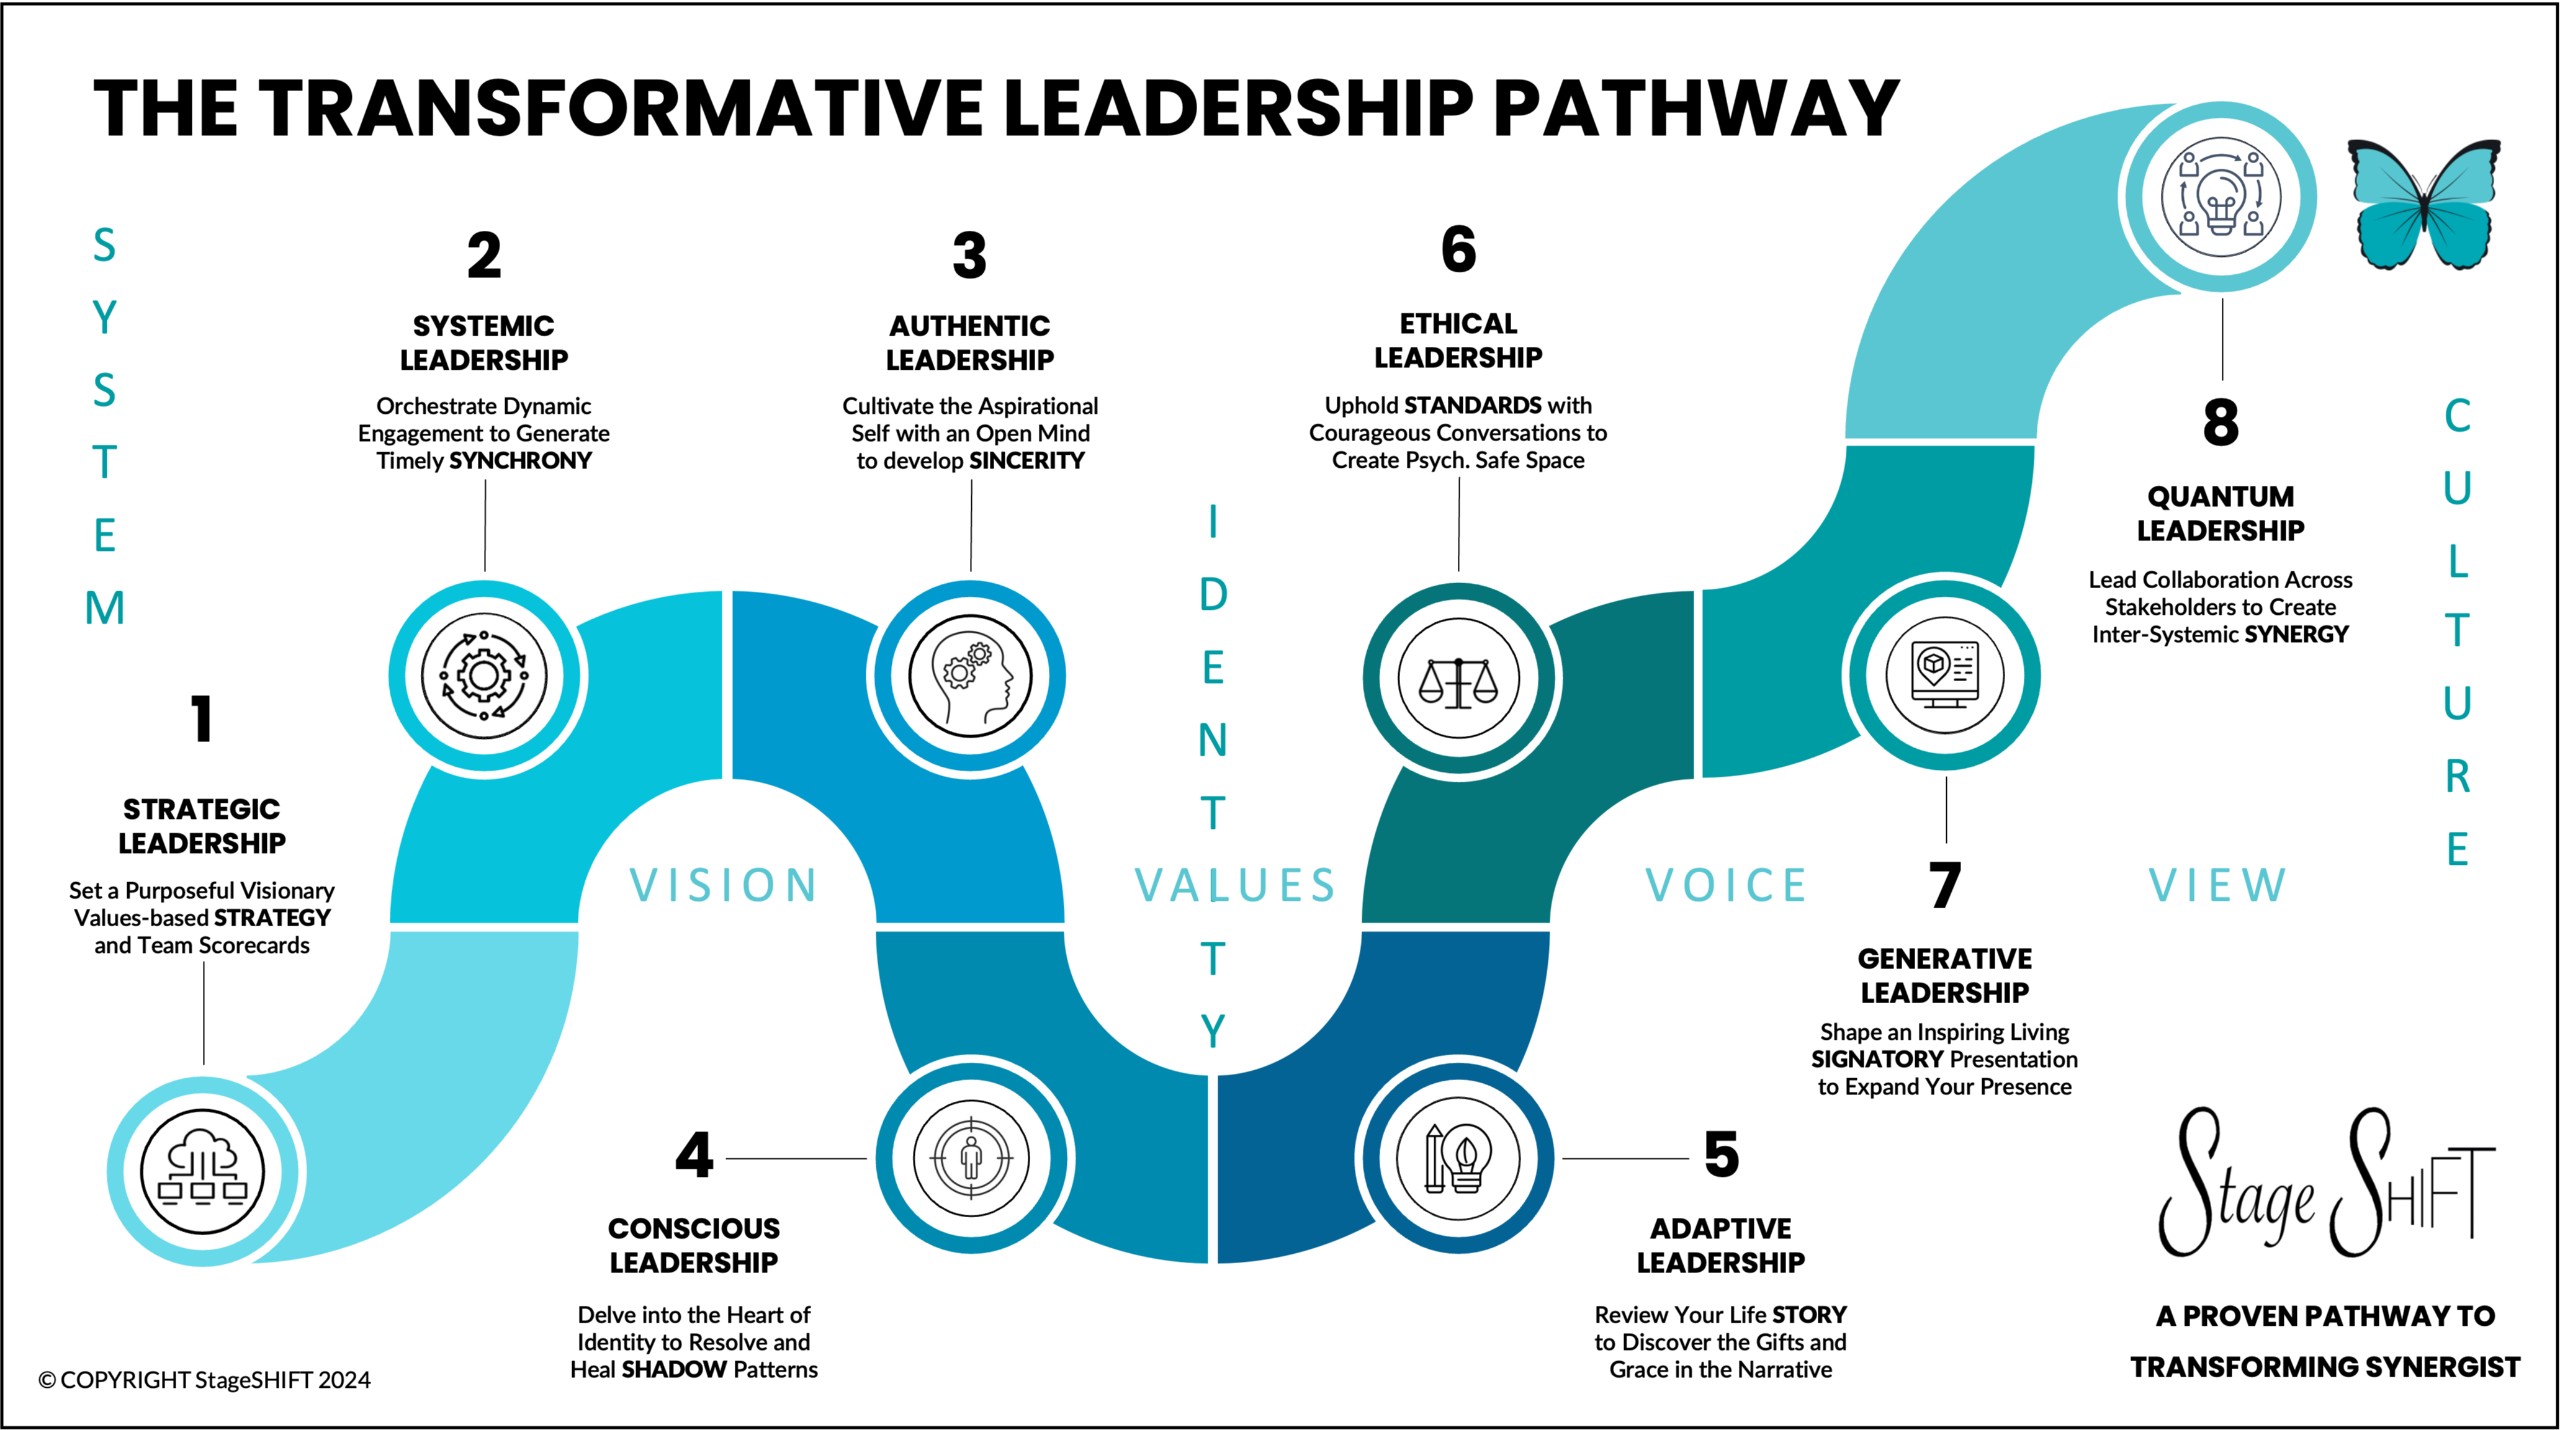 The transformative leadership pathway